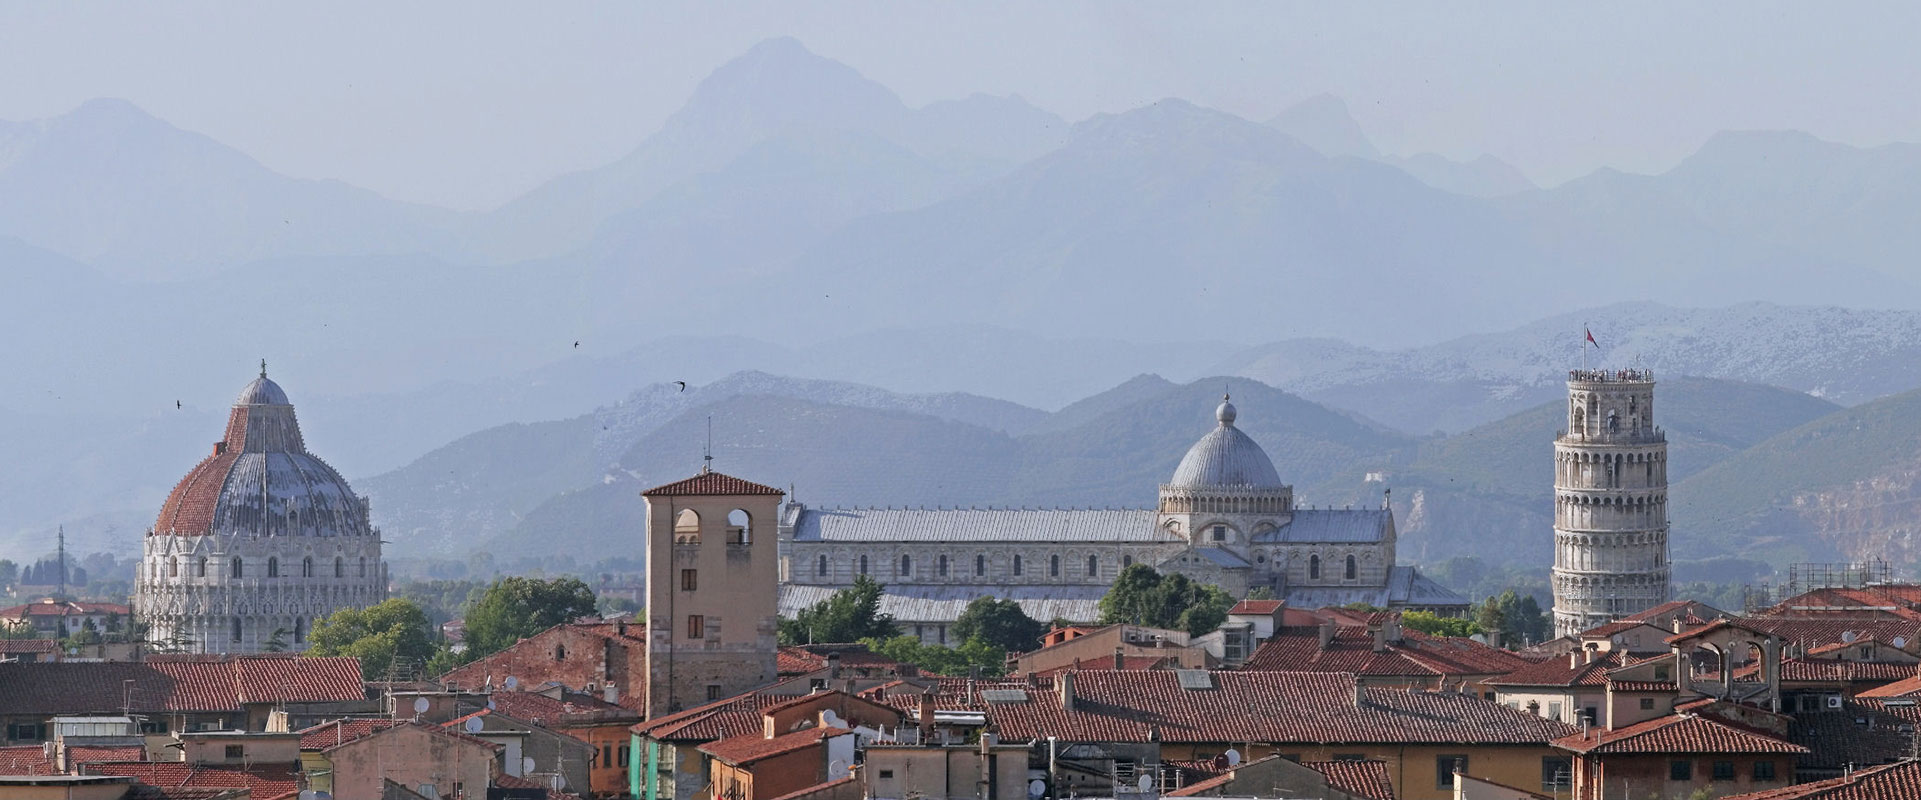 Residence le Benedettine - Pisa